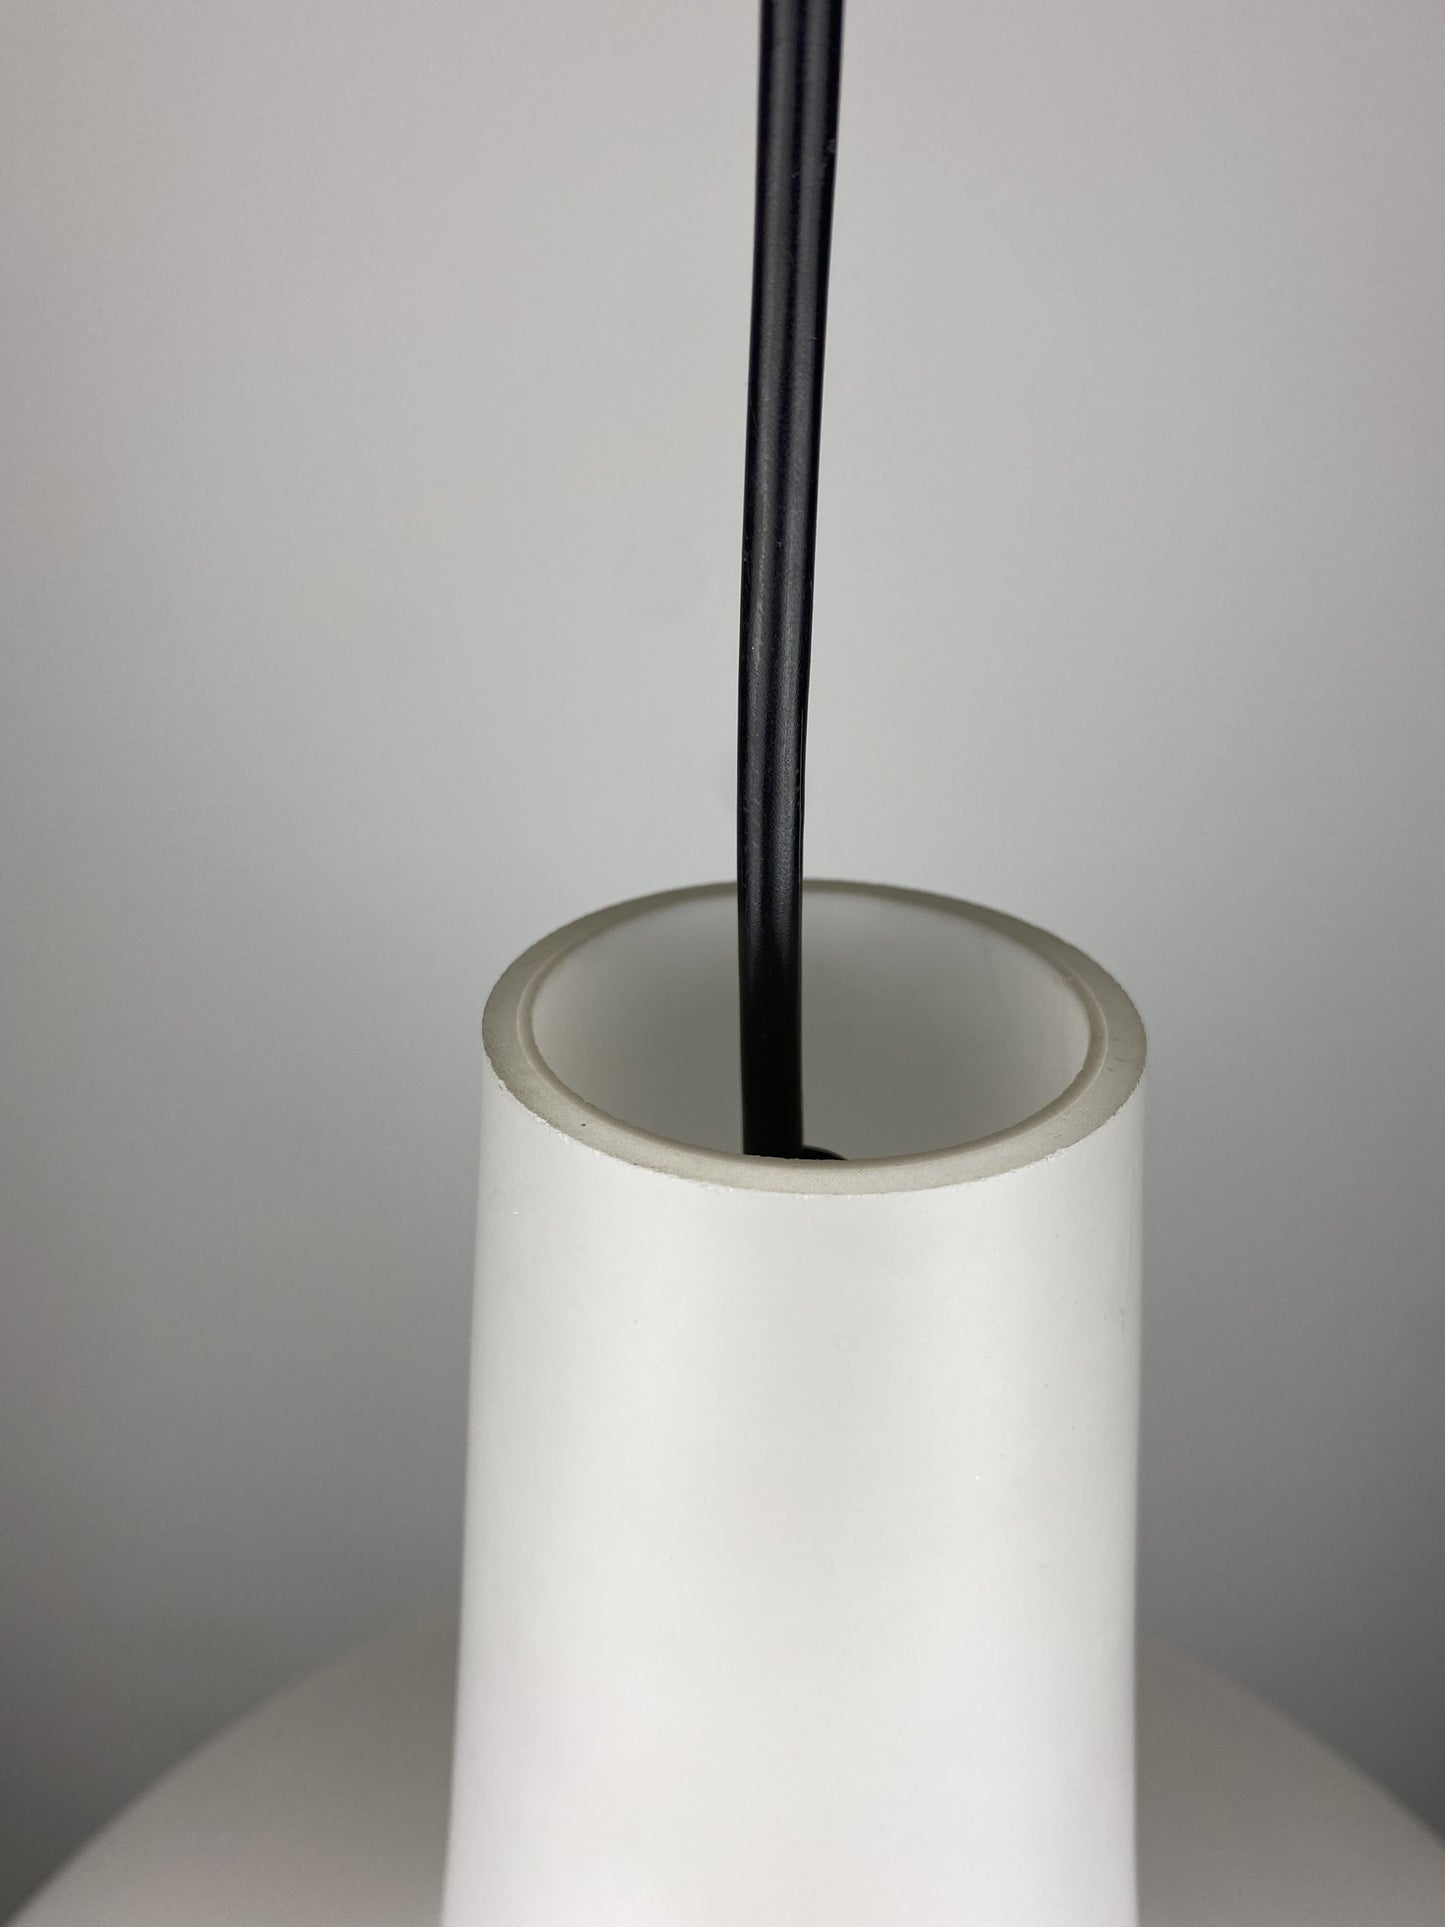 White glass Bulbo pendant light by Johansson-Pape Iittala for Finland Stockmann-Orno A.B Kerava 1954